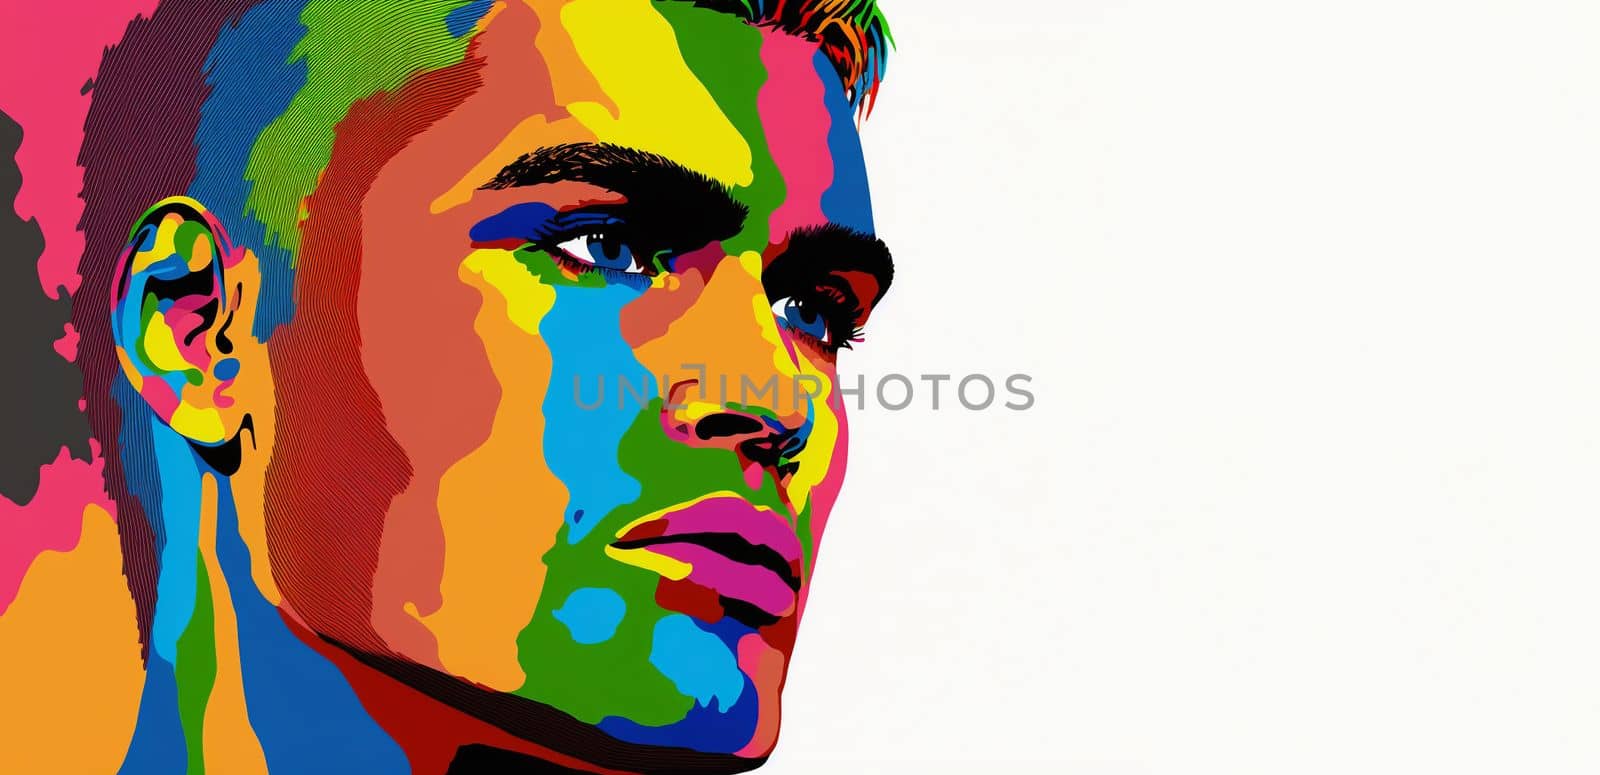 pop-art style illustration of a homosexual. LGBT